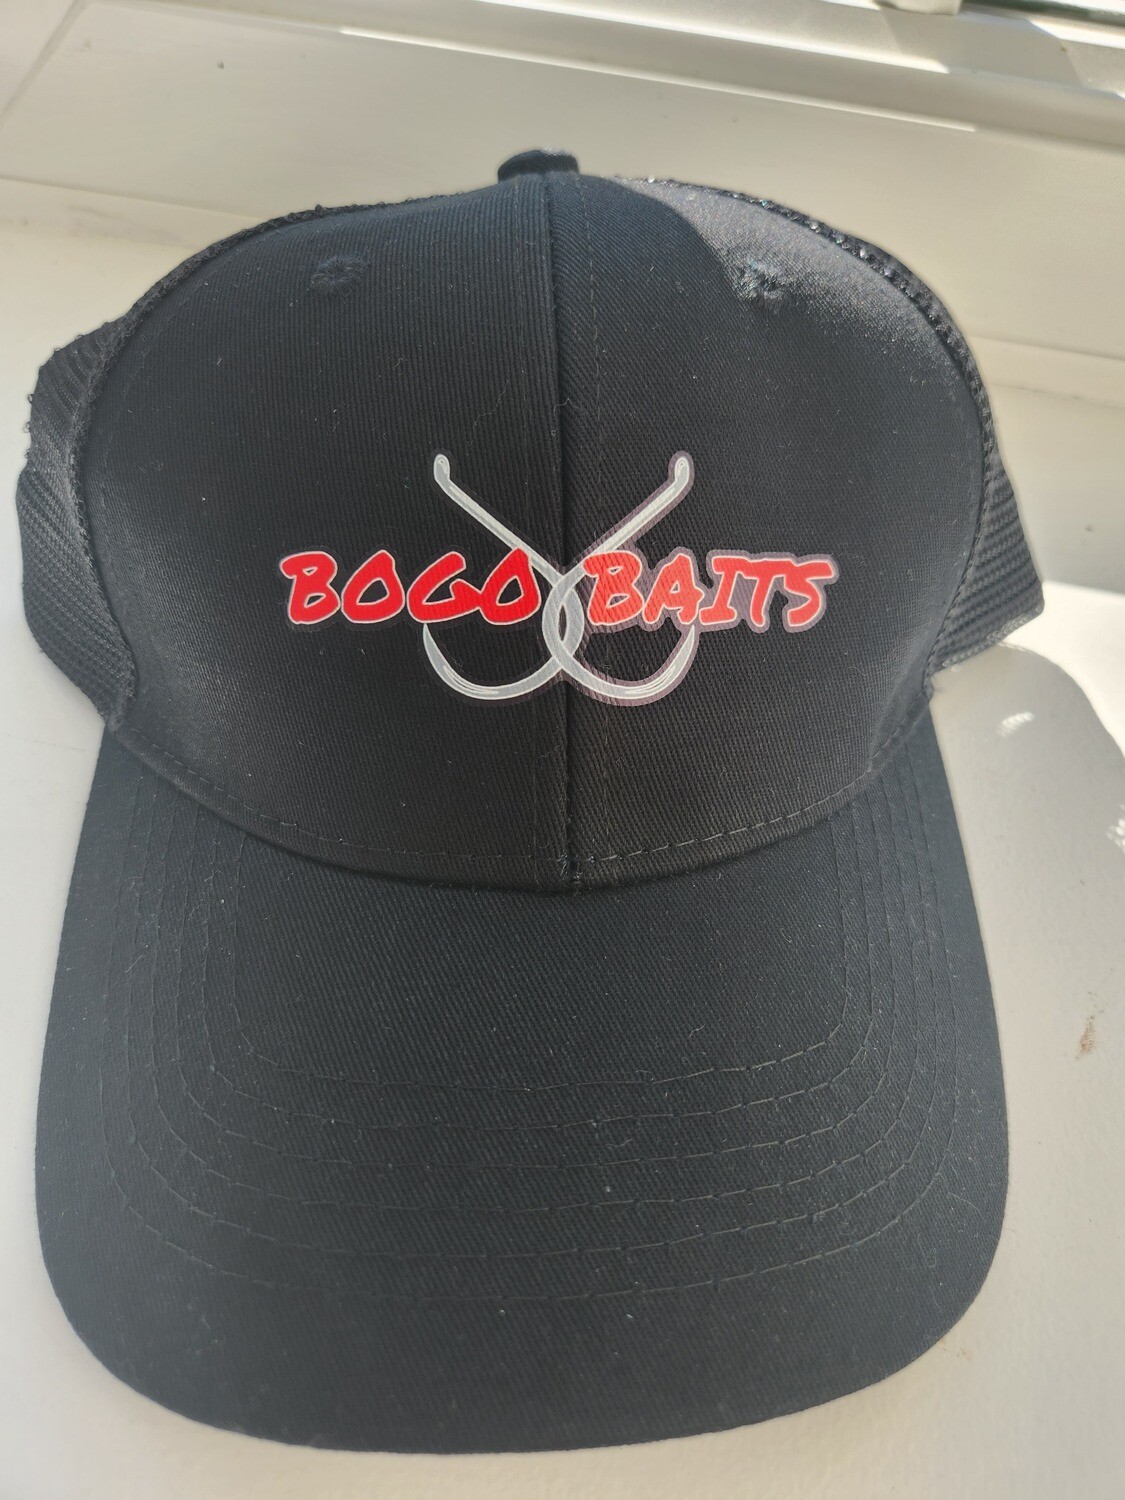 Bogo baits hat